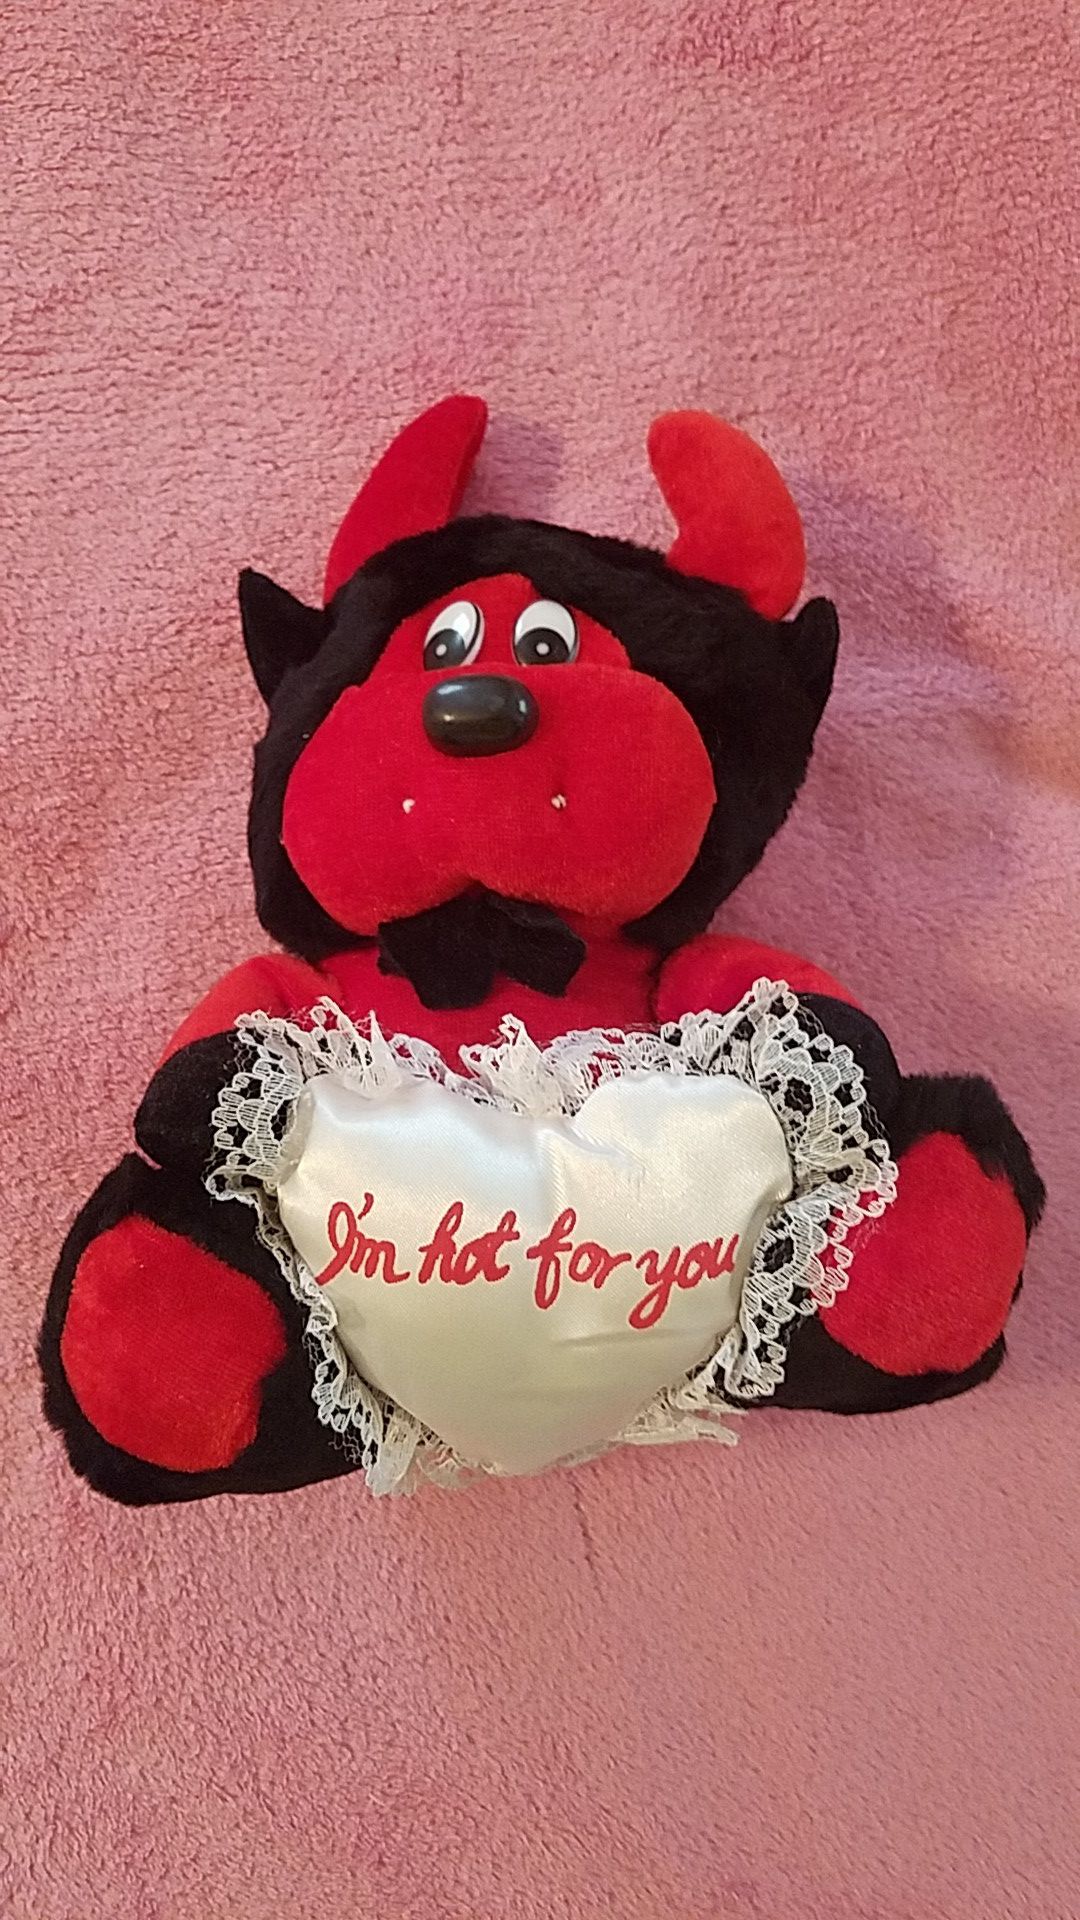 Brand new Valentine's day "I'm hot for you" devil